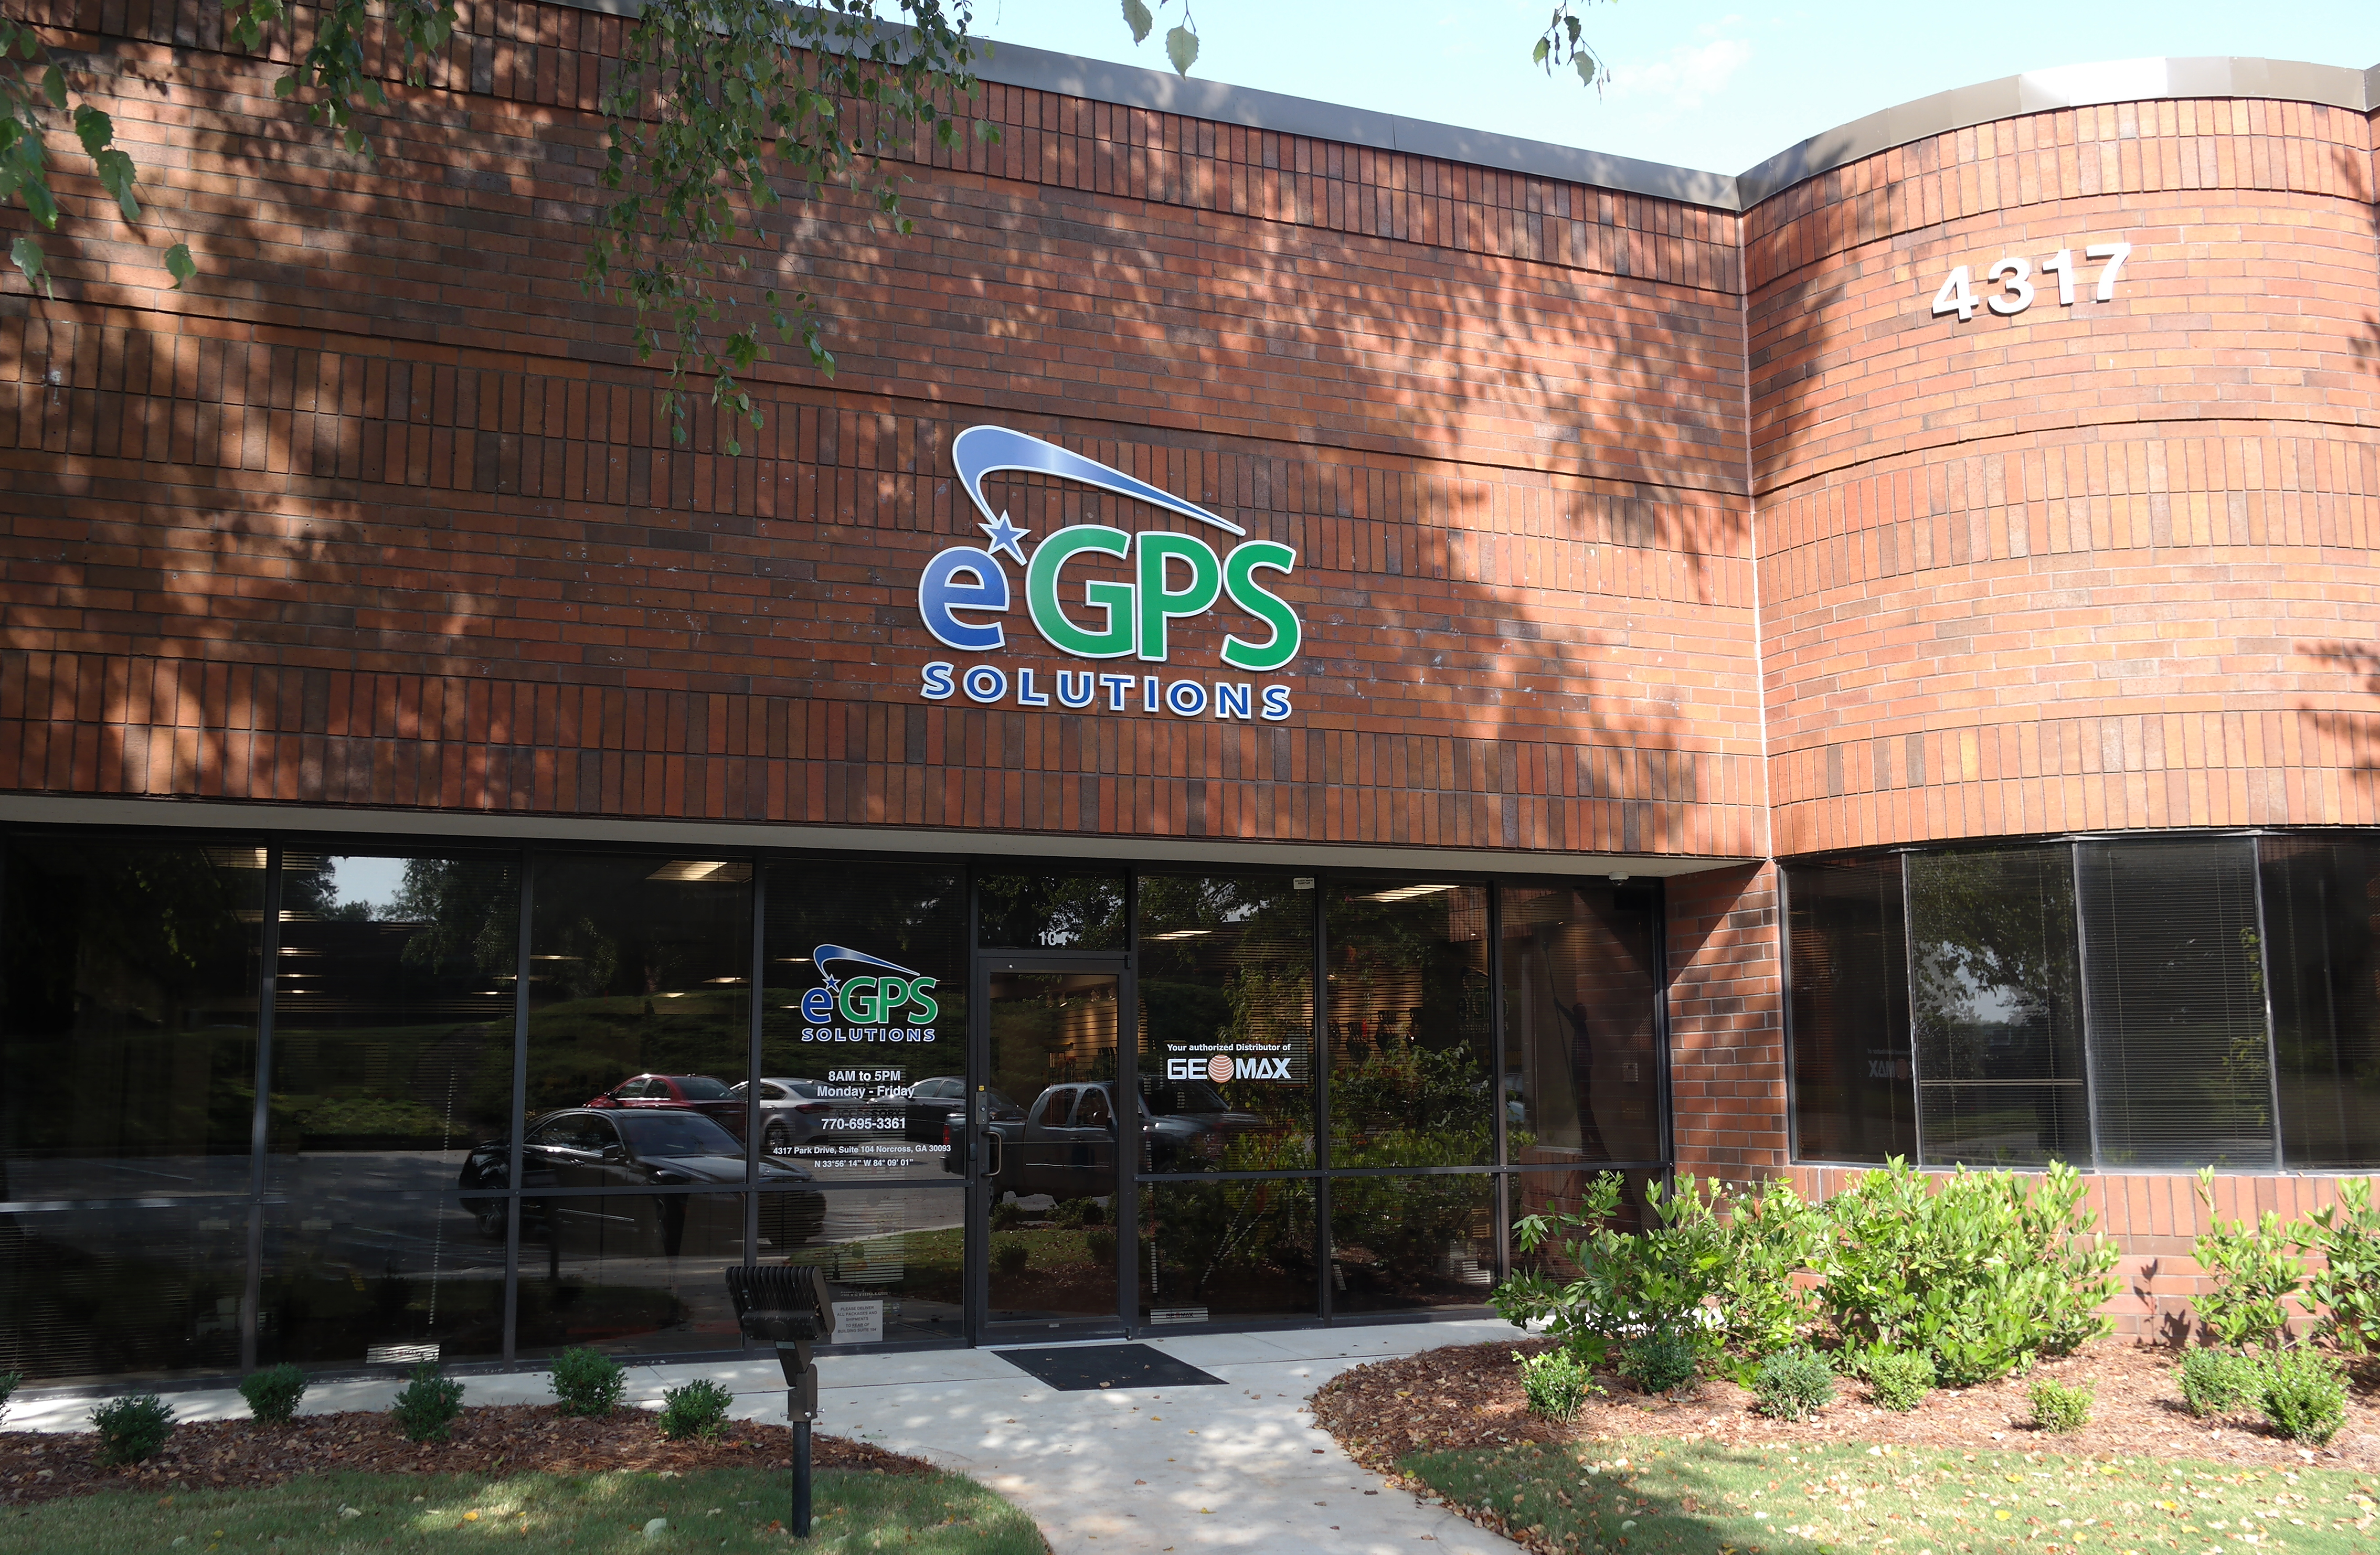 egps solutions office building in Norcross, GA